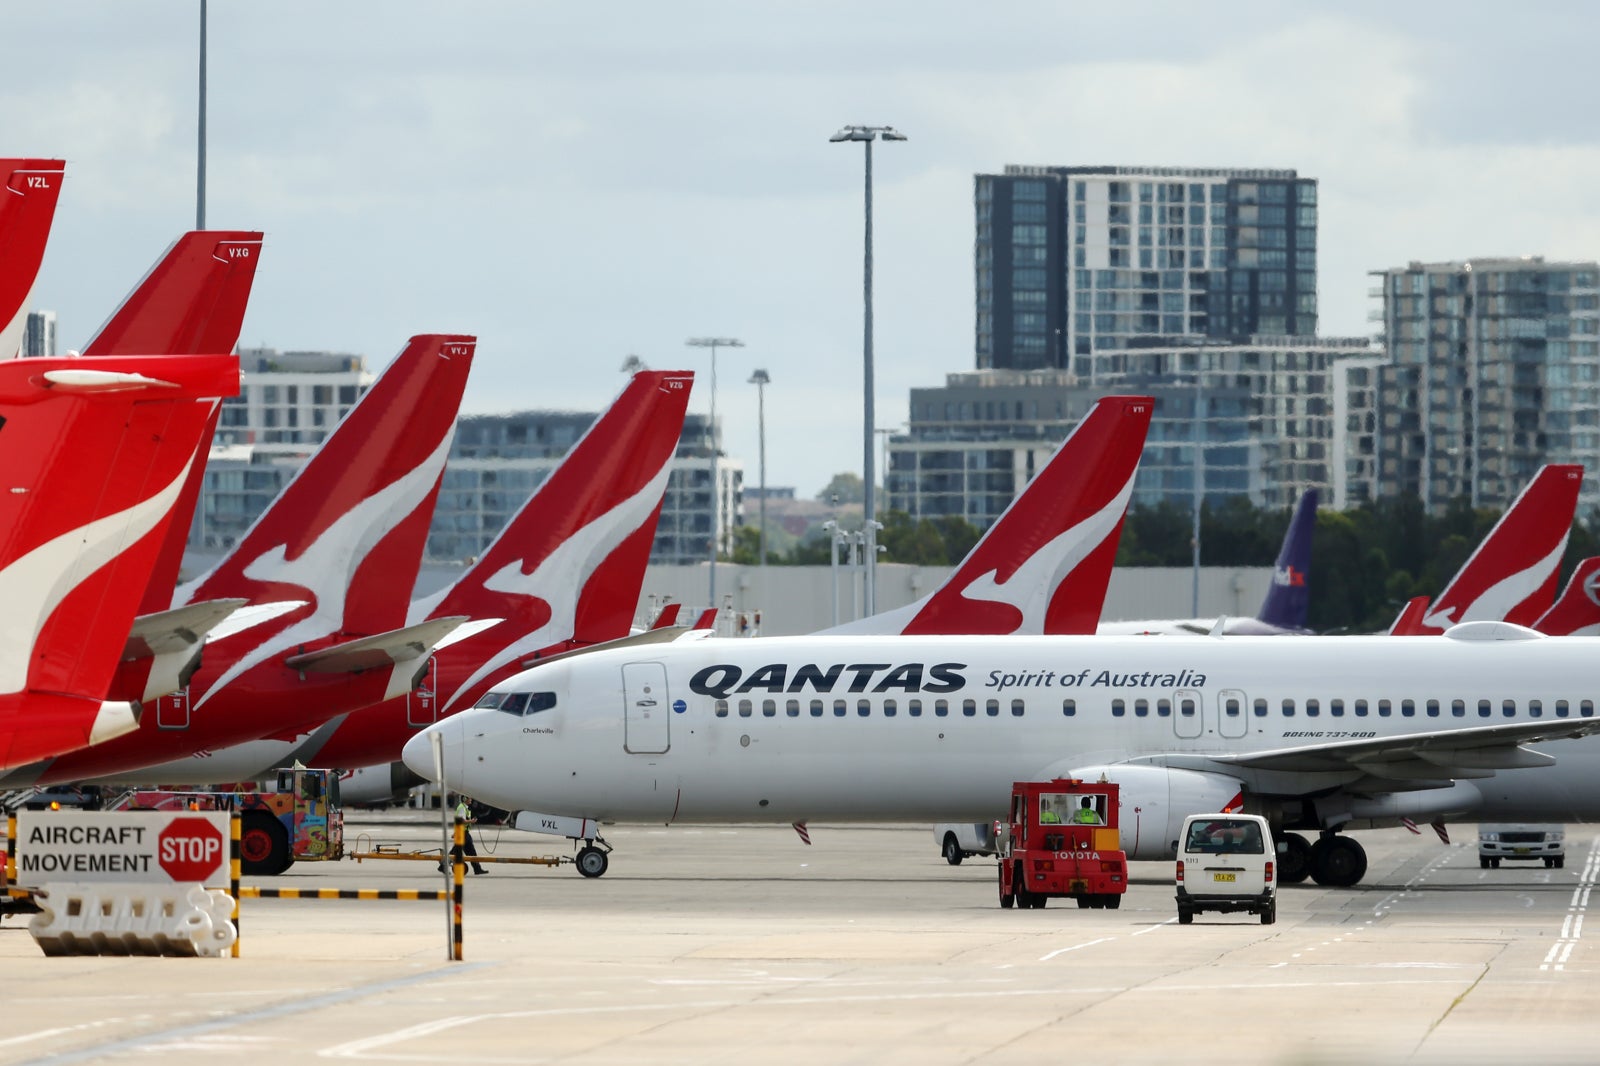 Qantas Axes Almost All Overseas Flights as Virus Ends Demand